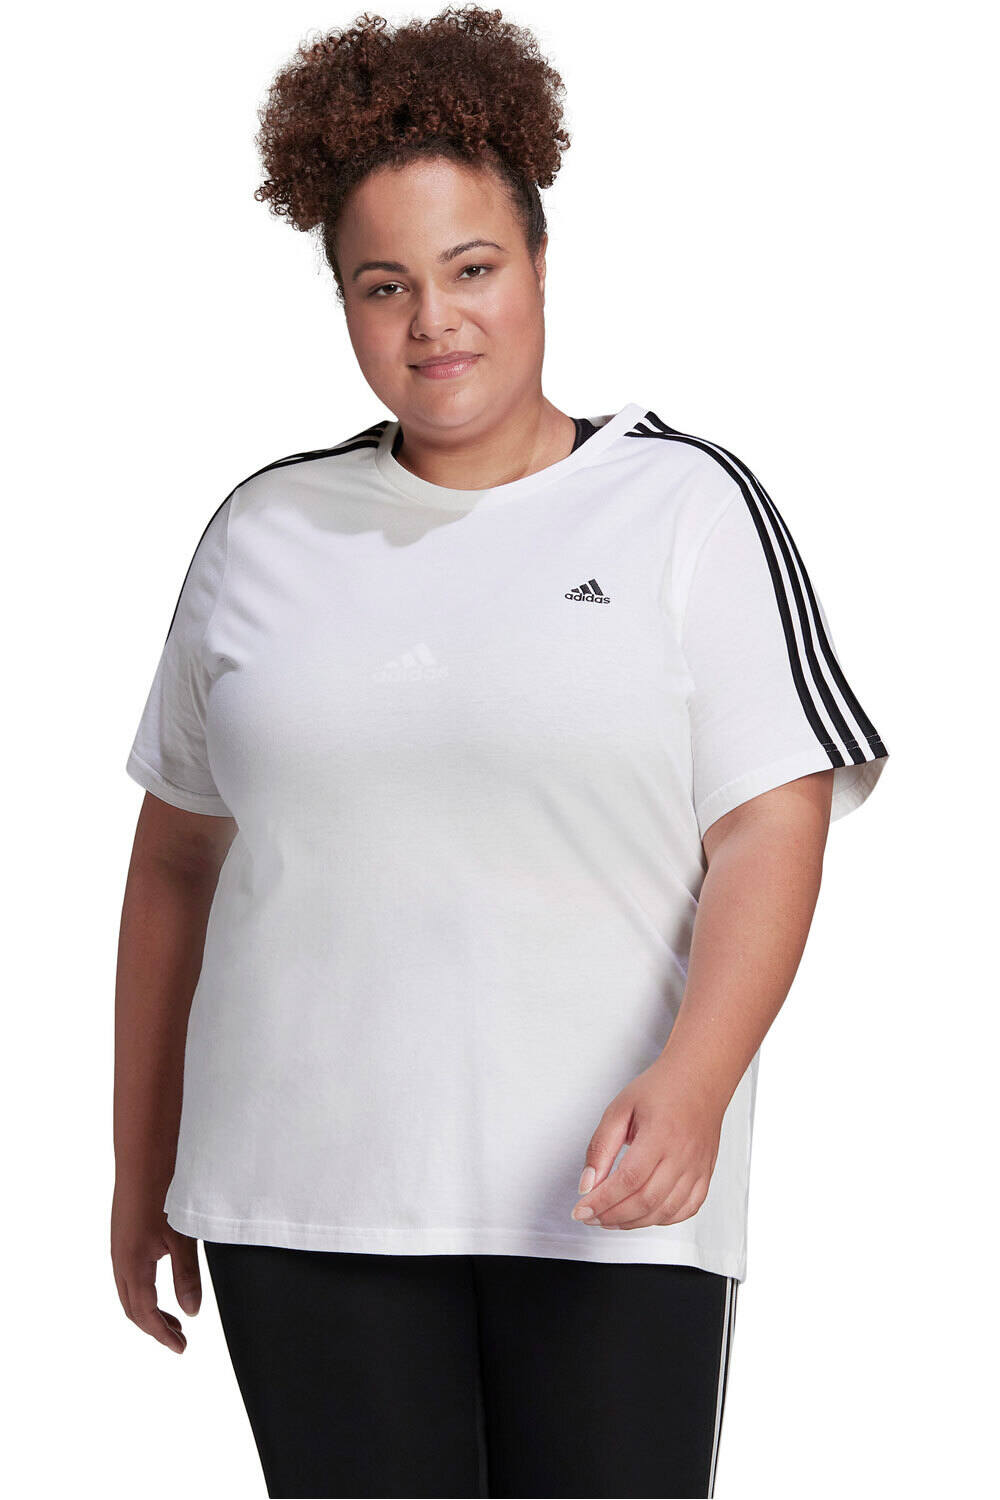 adidas camiseta manga corta mujer Essentials Slim 3 bandas (Tallas grandes) vista frontal